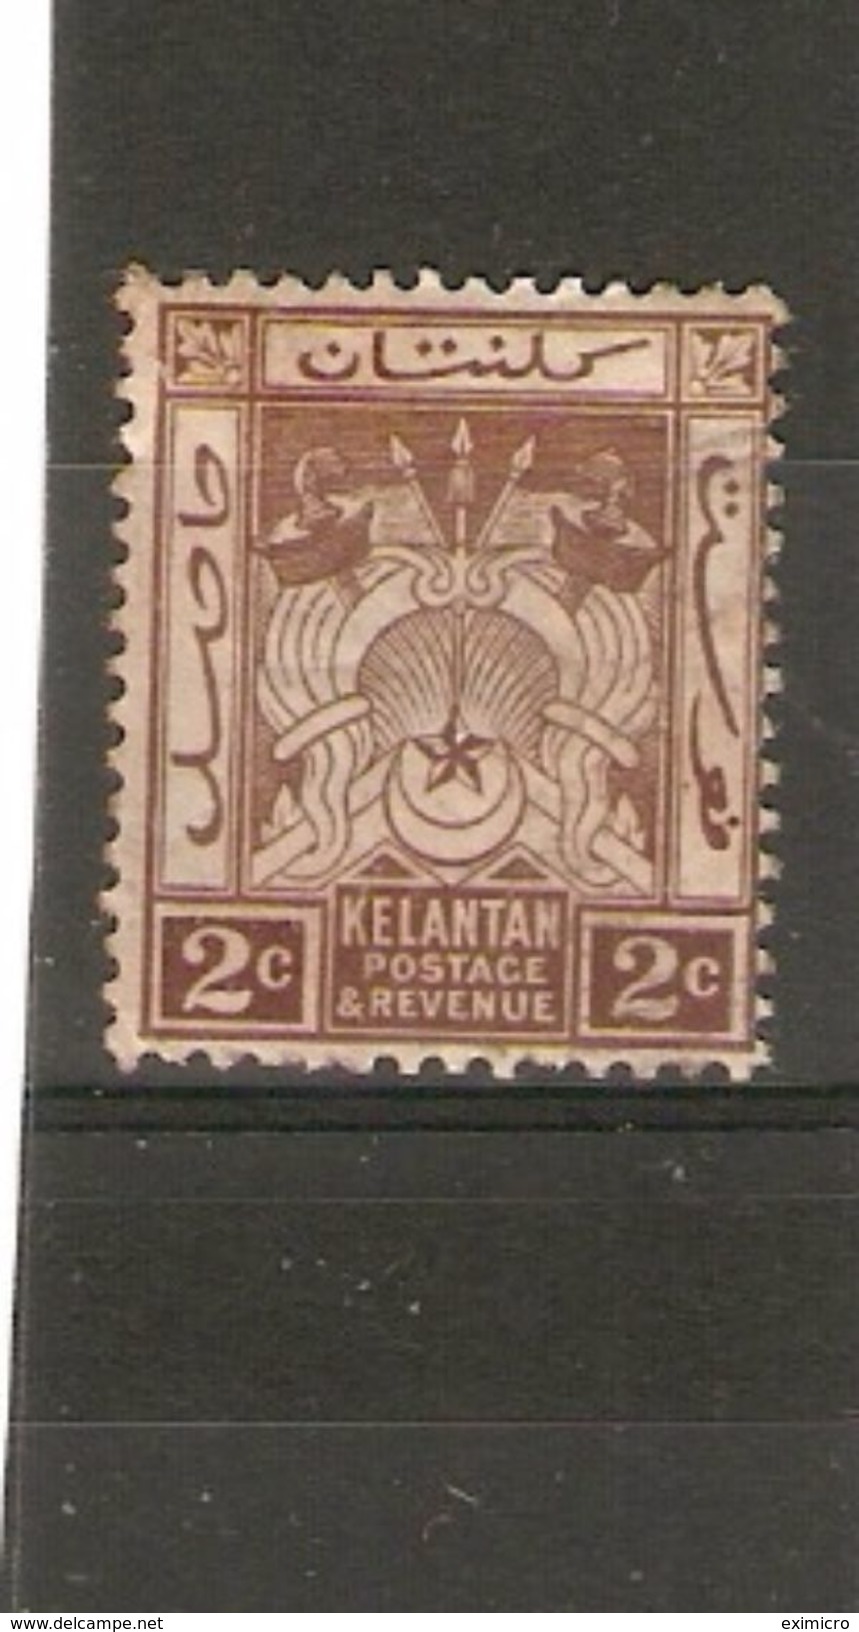 MALAYA - KELANTAN 1922 2c BROWN SG 16 WATERMARK MULTIPLE SCRIPT CA MOUNTED MINT Cat £7.50 - Kelantan